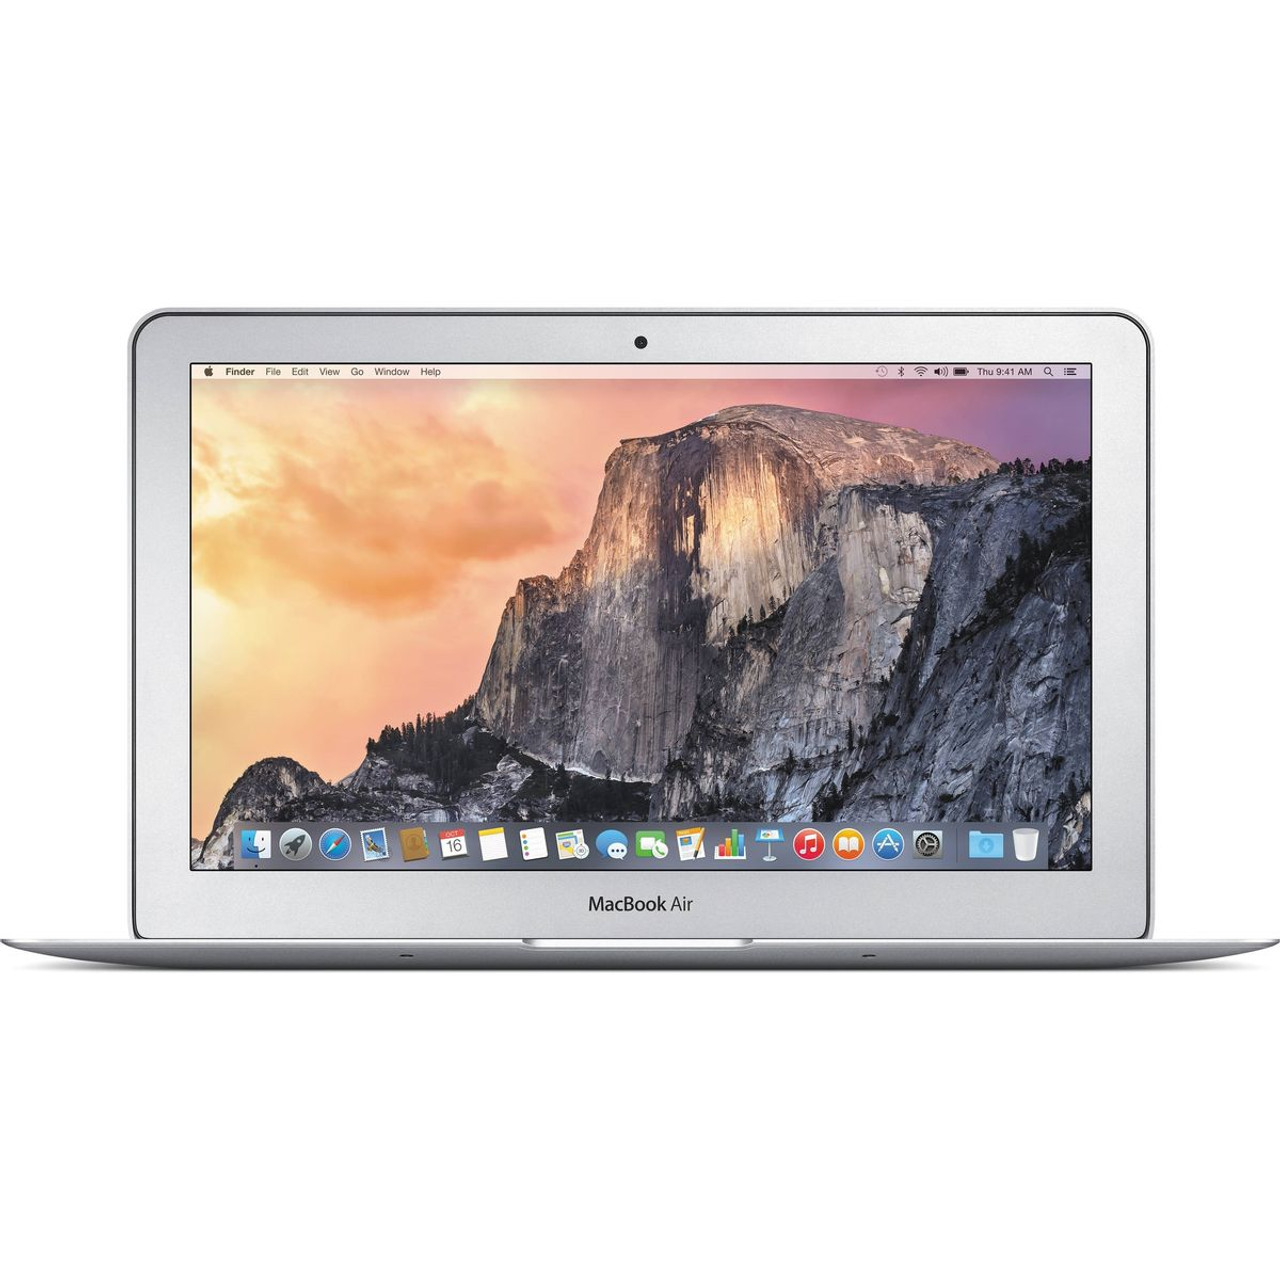 Apple MacBook Air (MJVM2LL/A) product image